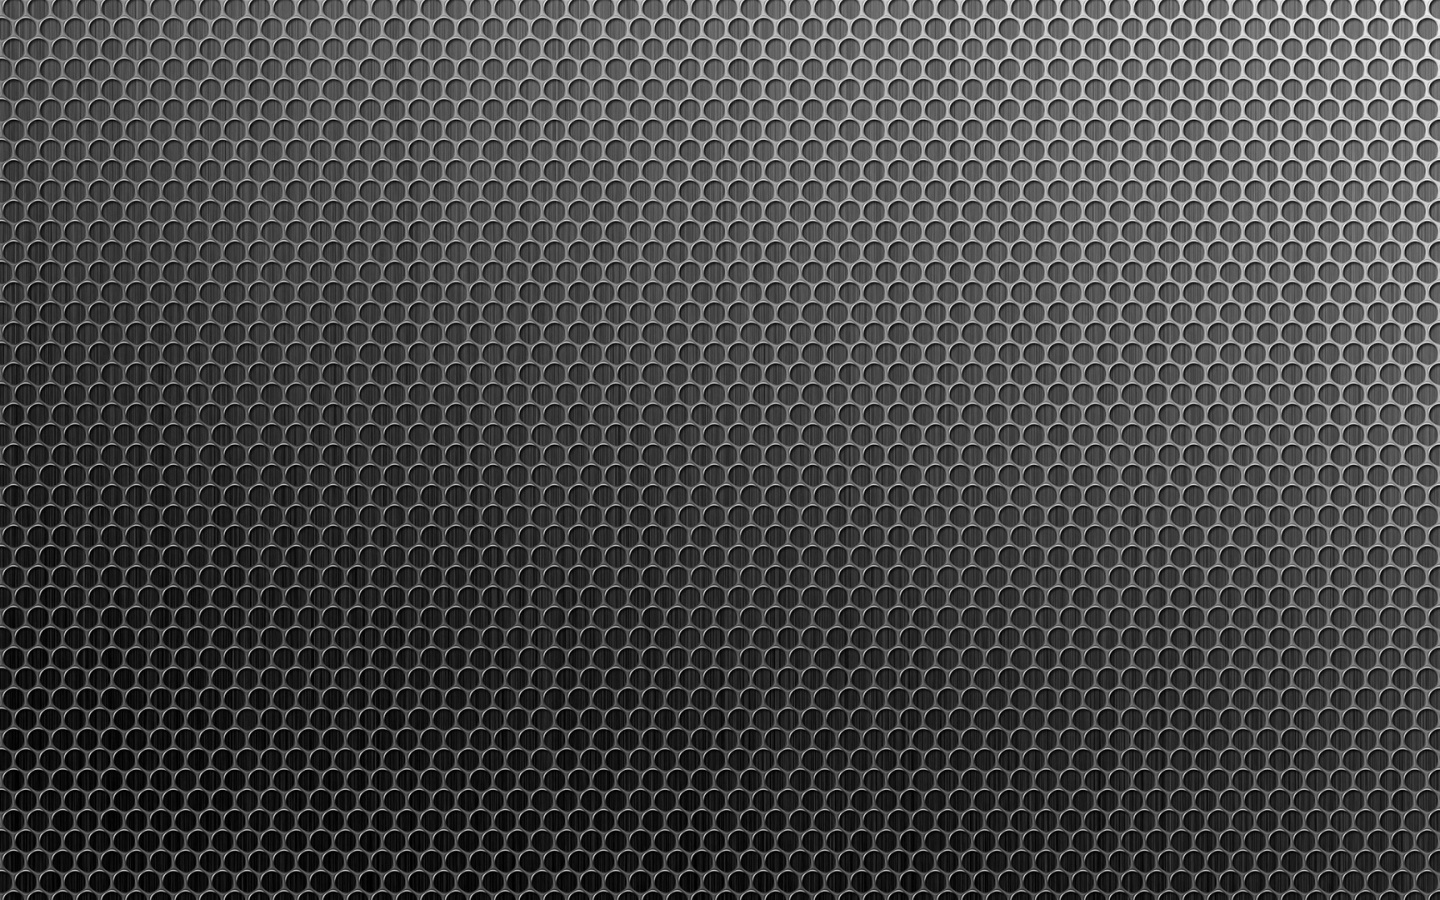 Grey Honeyb Pattern Desktop Pc And Mac Wallpaper